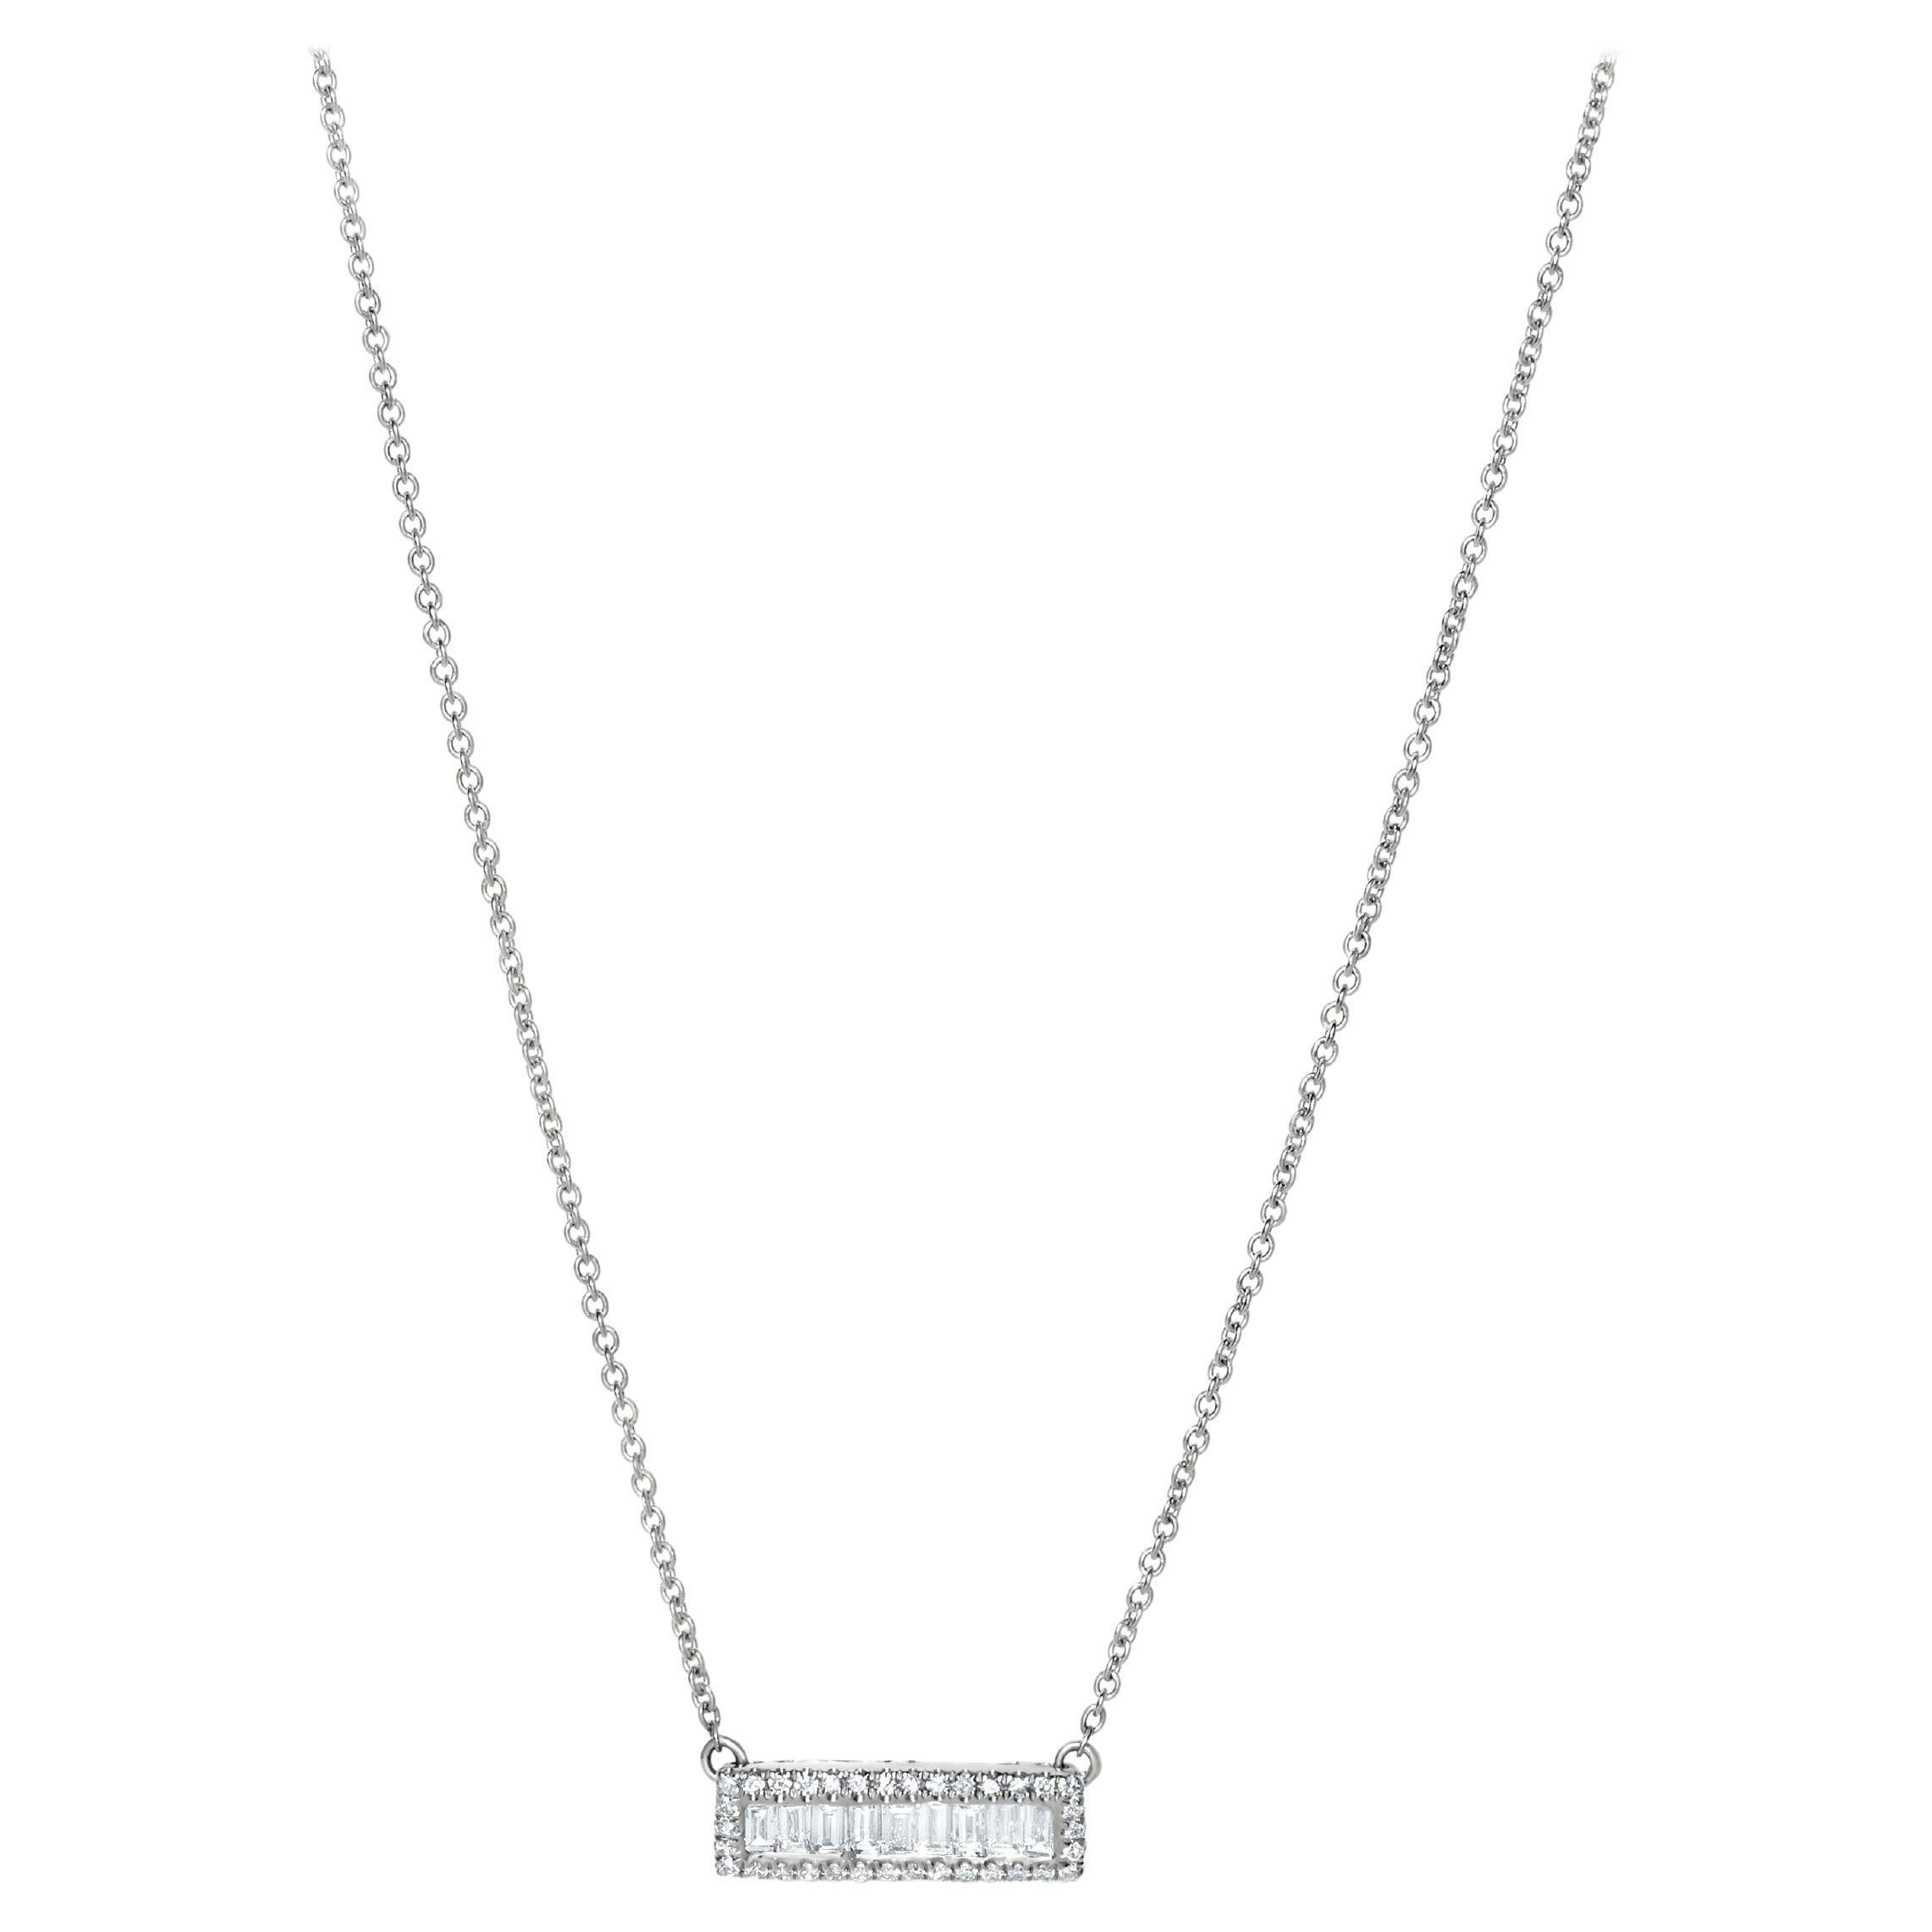 Luxle 0.36 Carat T.W Diamond Bar Pendant Necklace in 14k White Gold For Sale